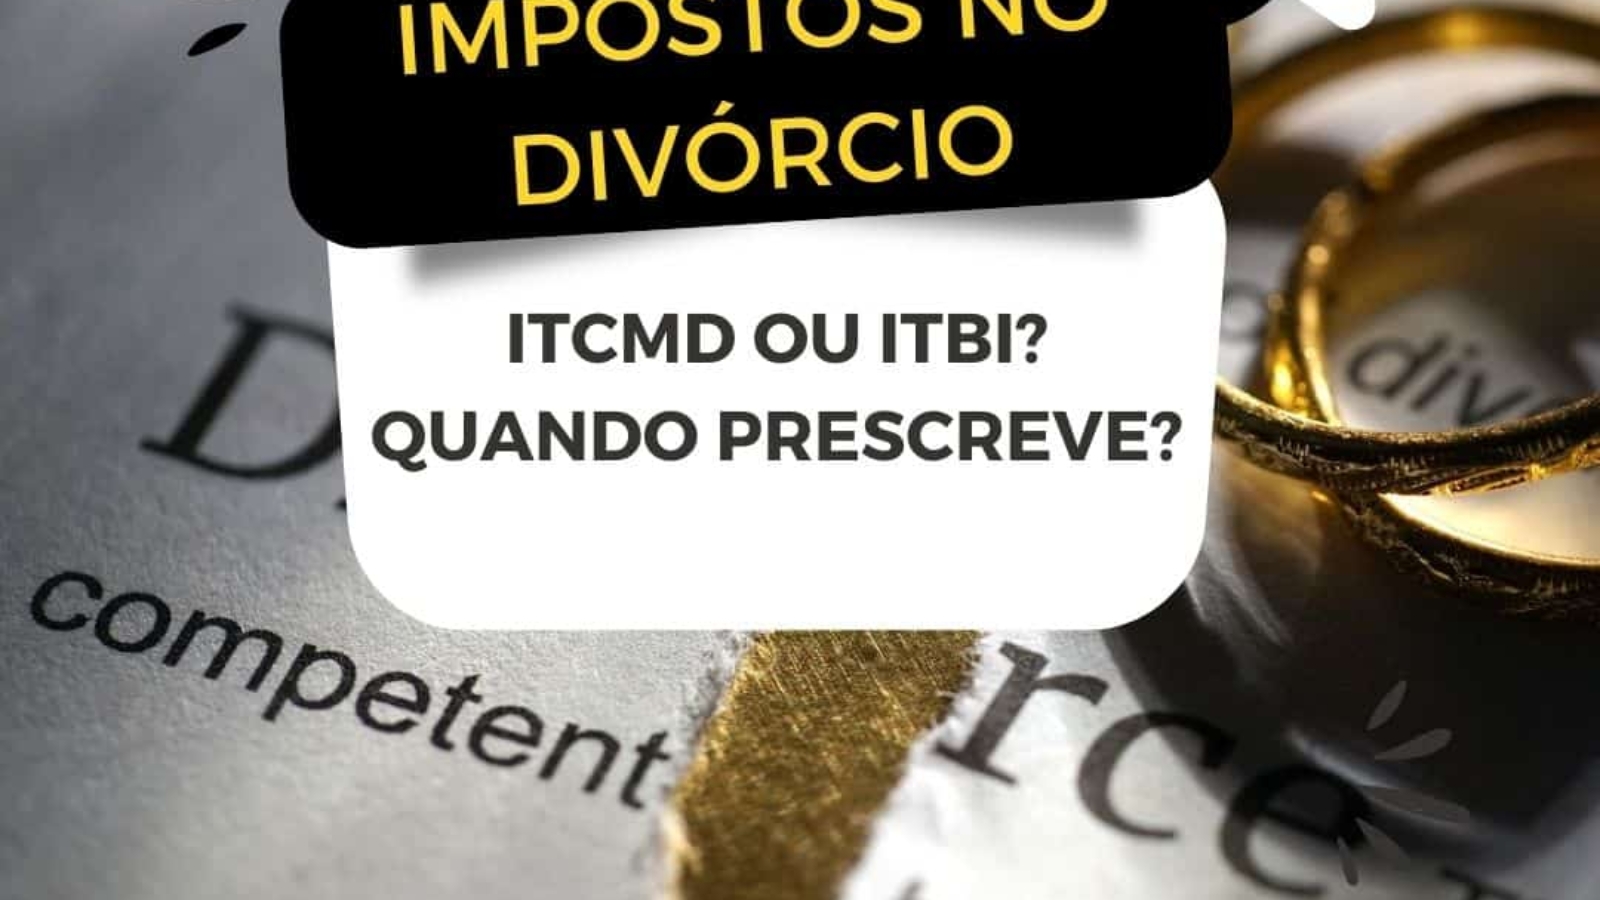 itcmd itbi divorcio